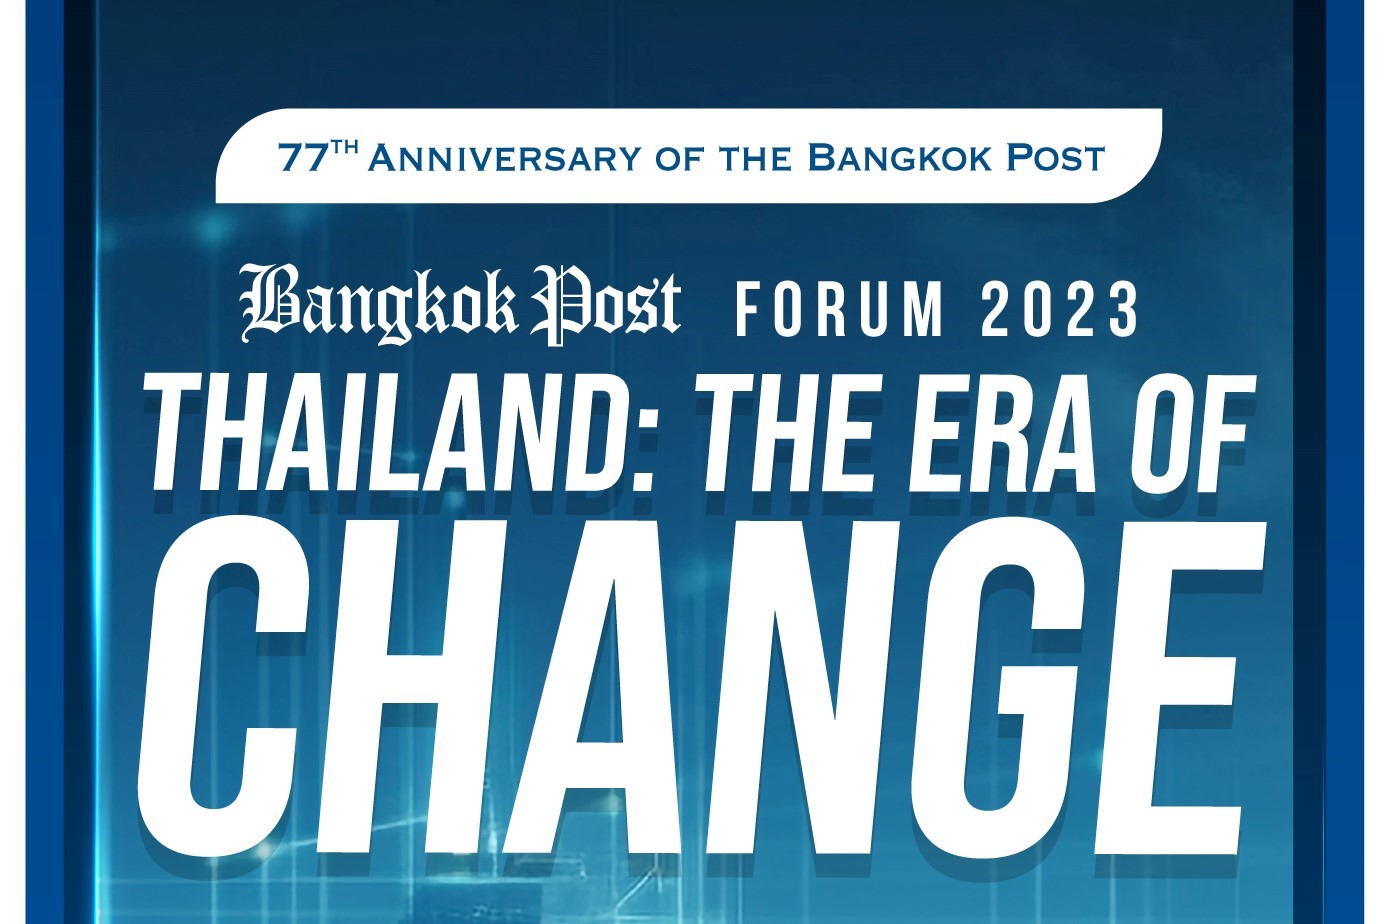 Bangkok Post forum 2023: Thailand the era of change